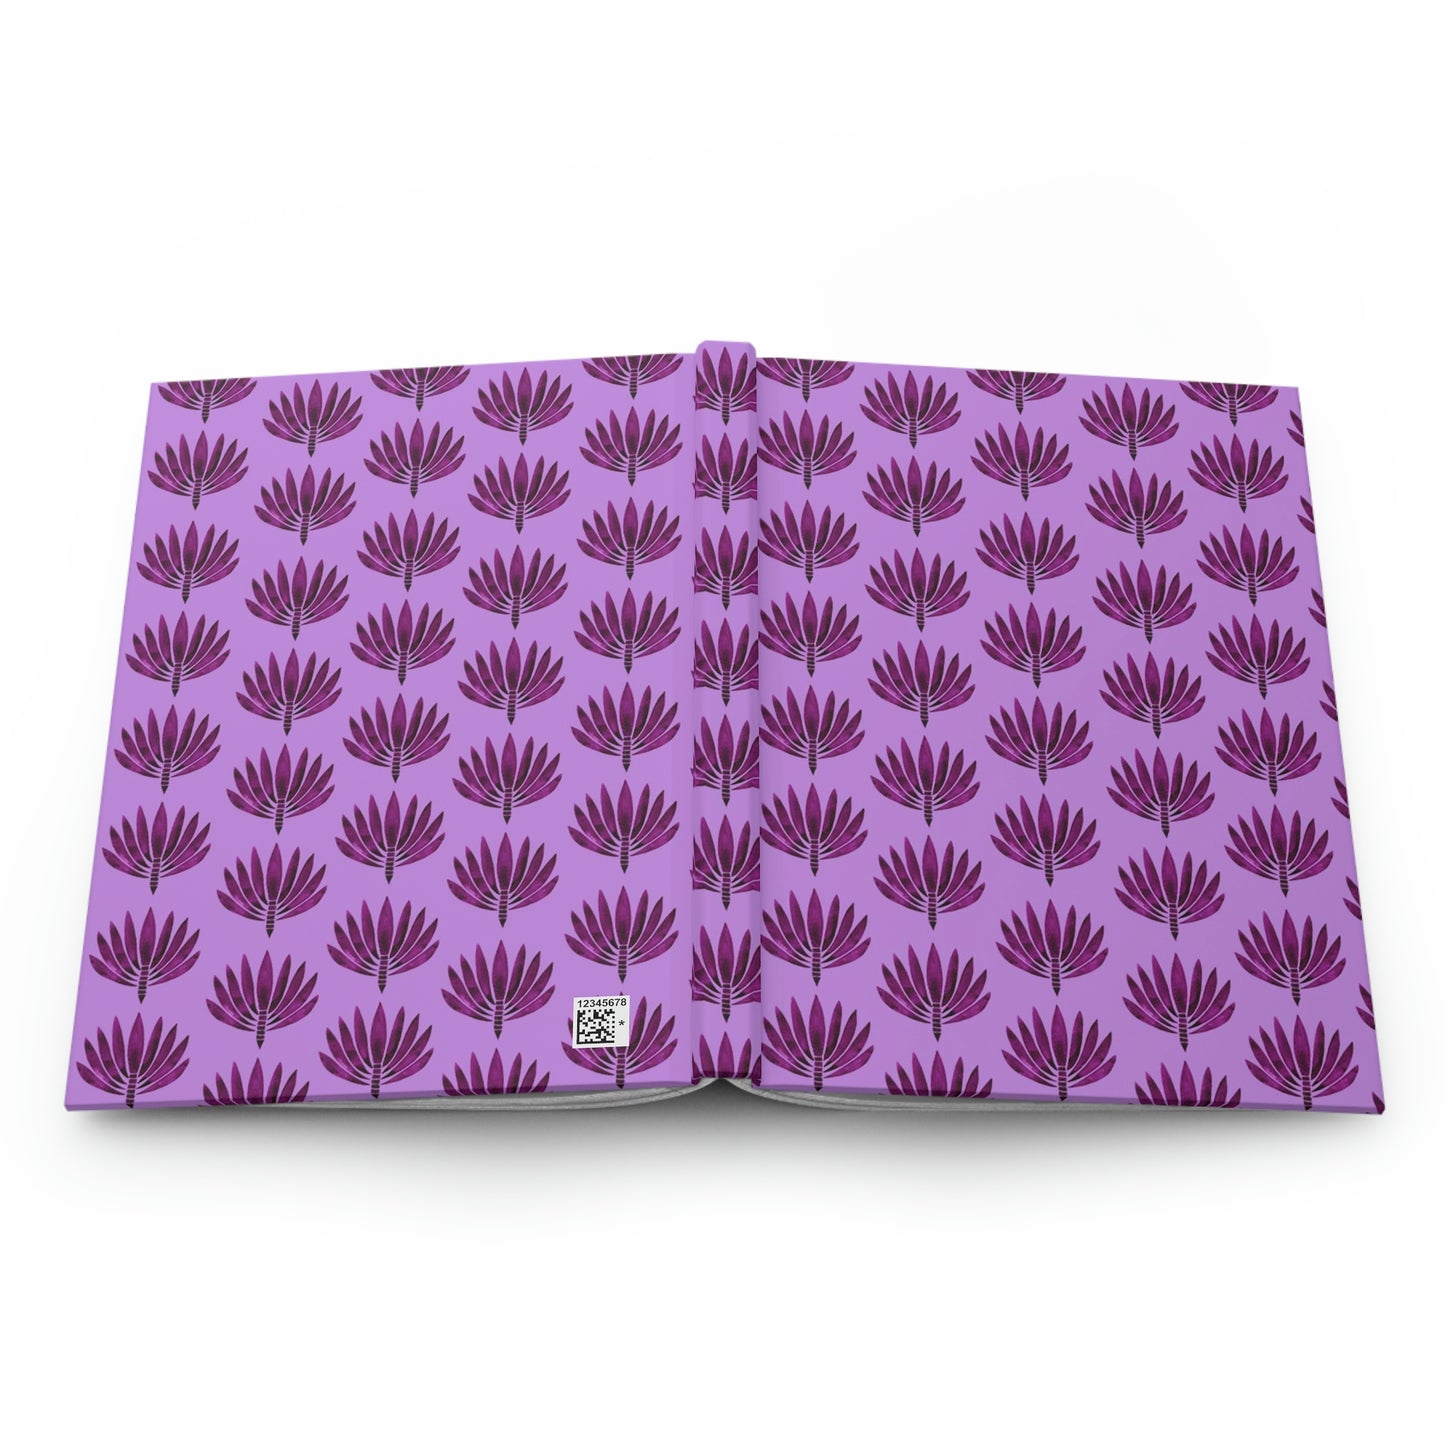 Yoga Journal - Violet Pink Flower Feather Hardcover Journal Matte